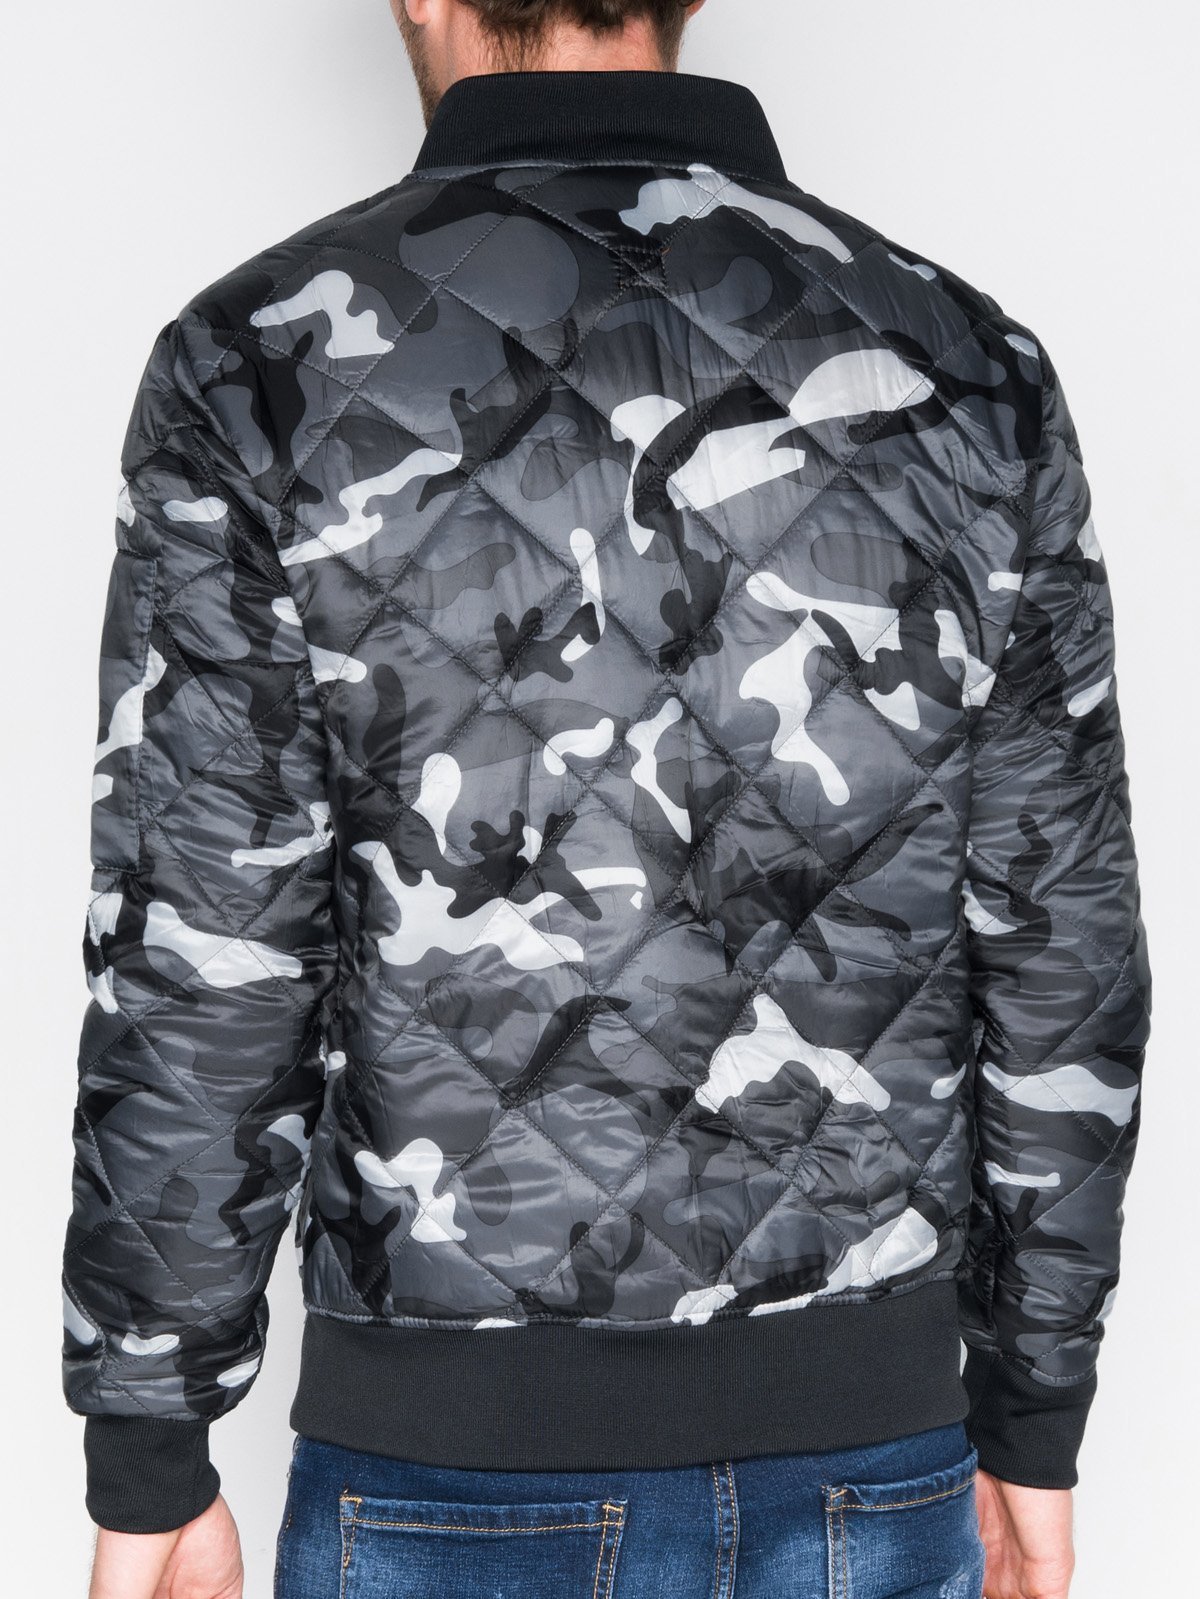 Men's mid-season bomber jacket C357 - grey/camo | MODONE wholesale ...